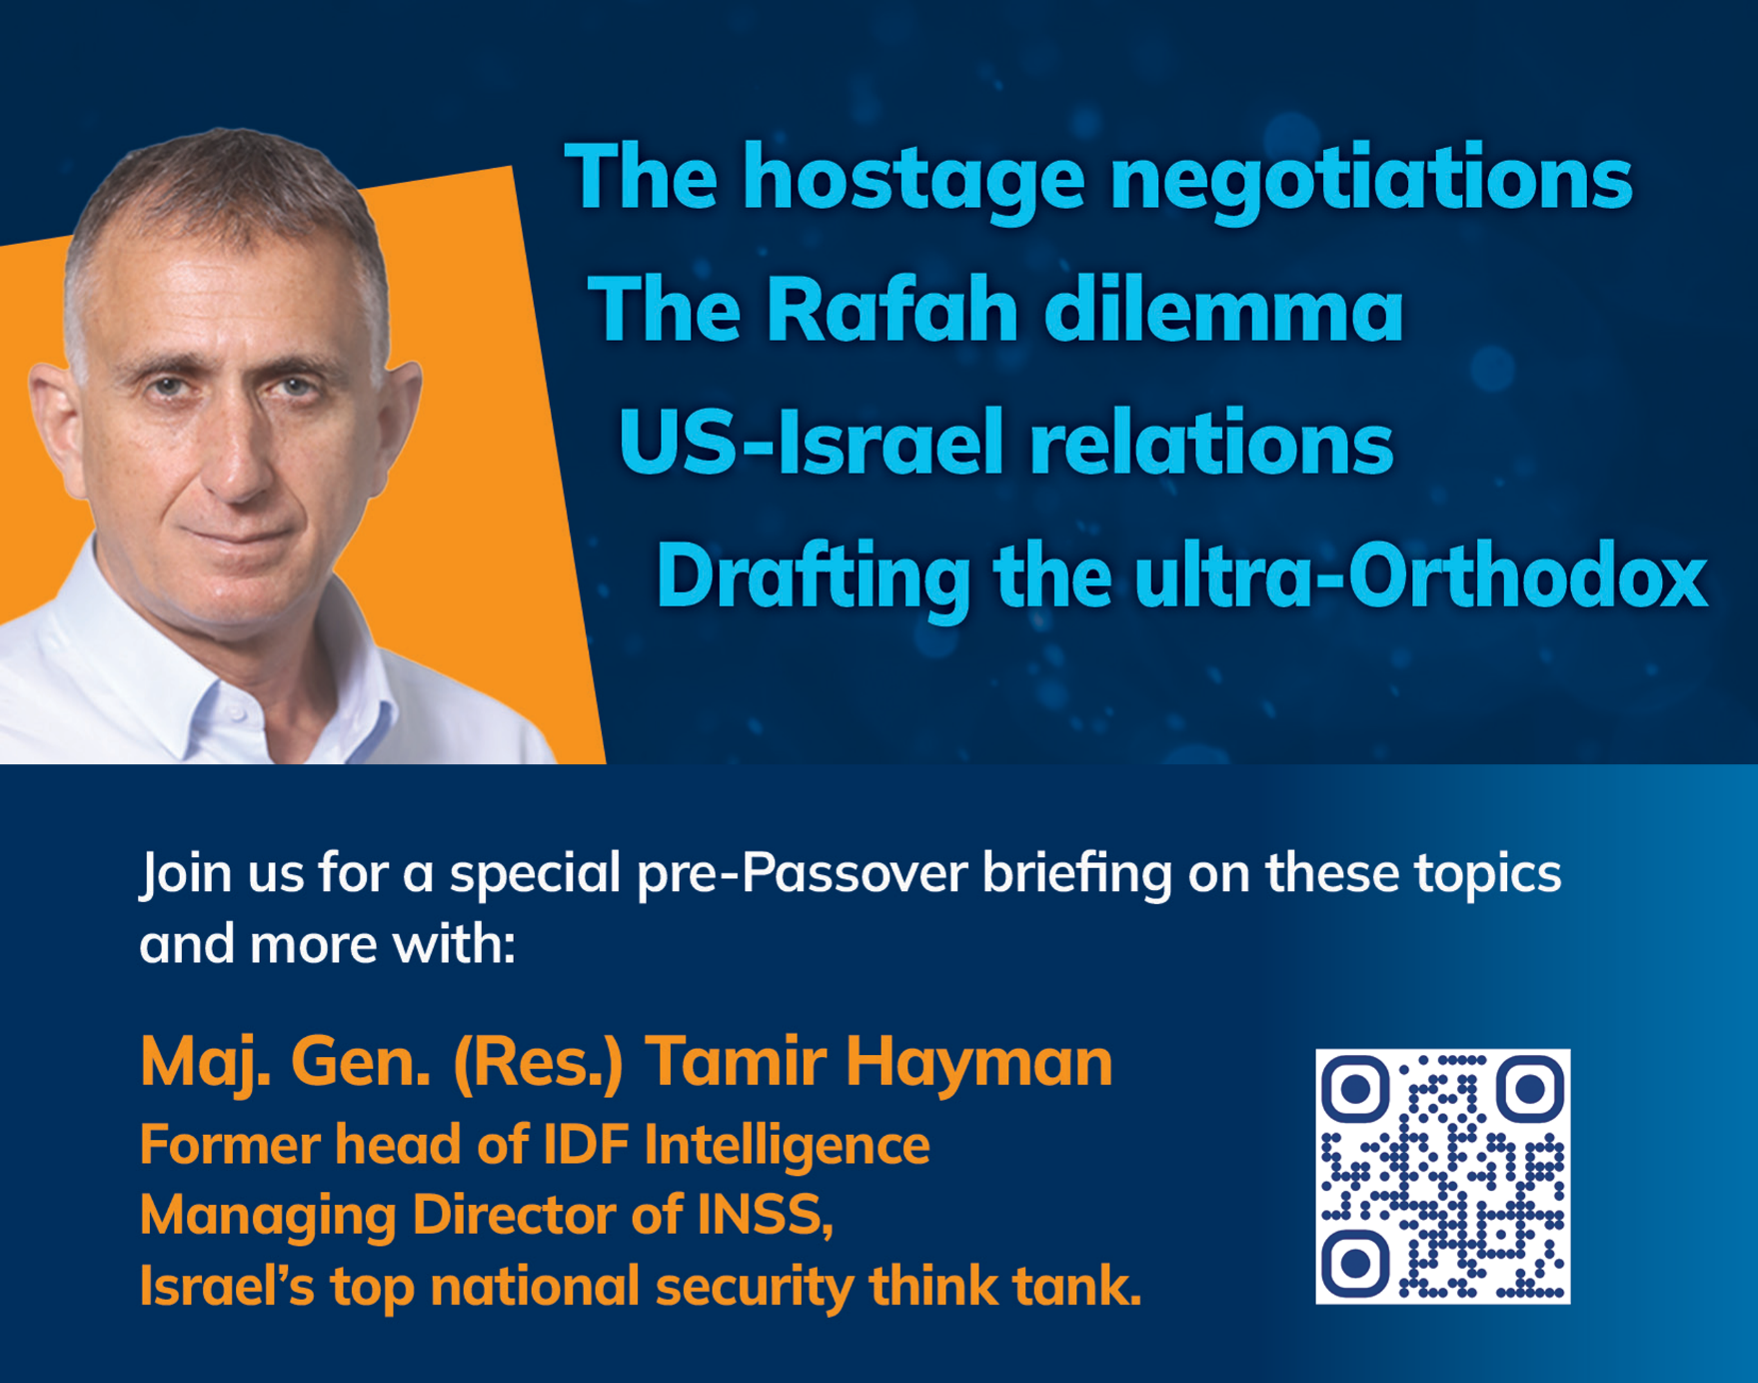 Special Briefing with ex-IDF Intelligence Chief MG (Res.) Tamir Hayman